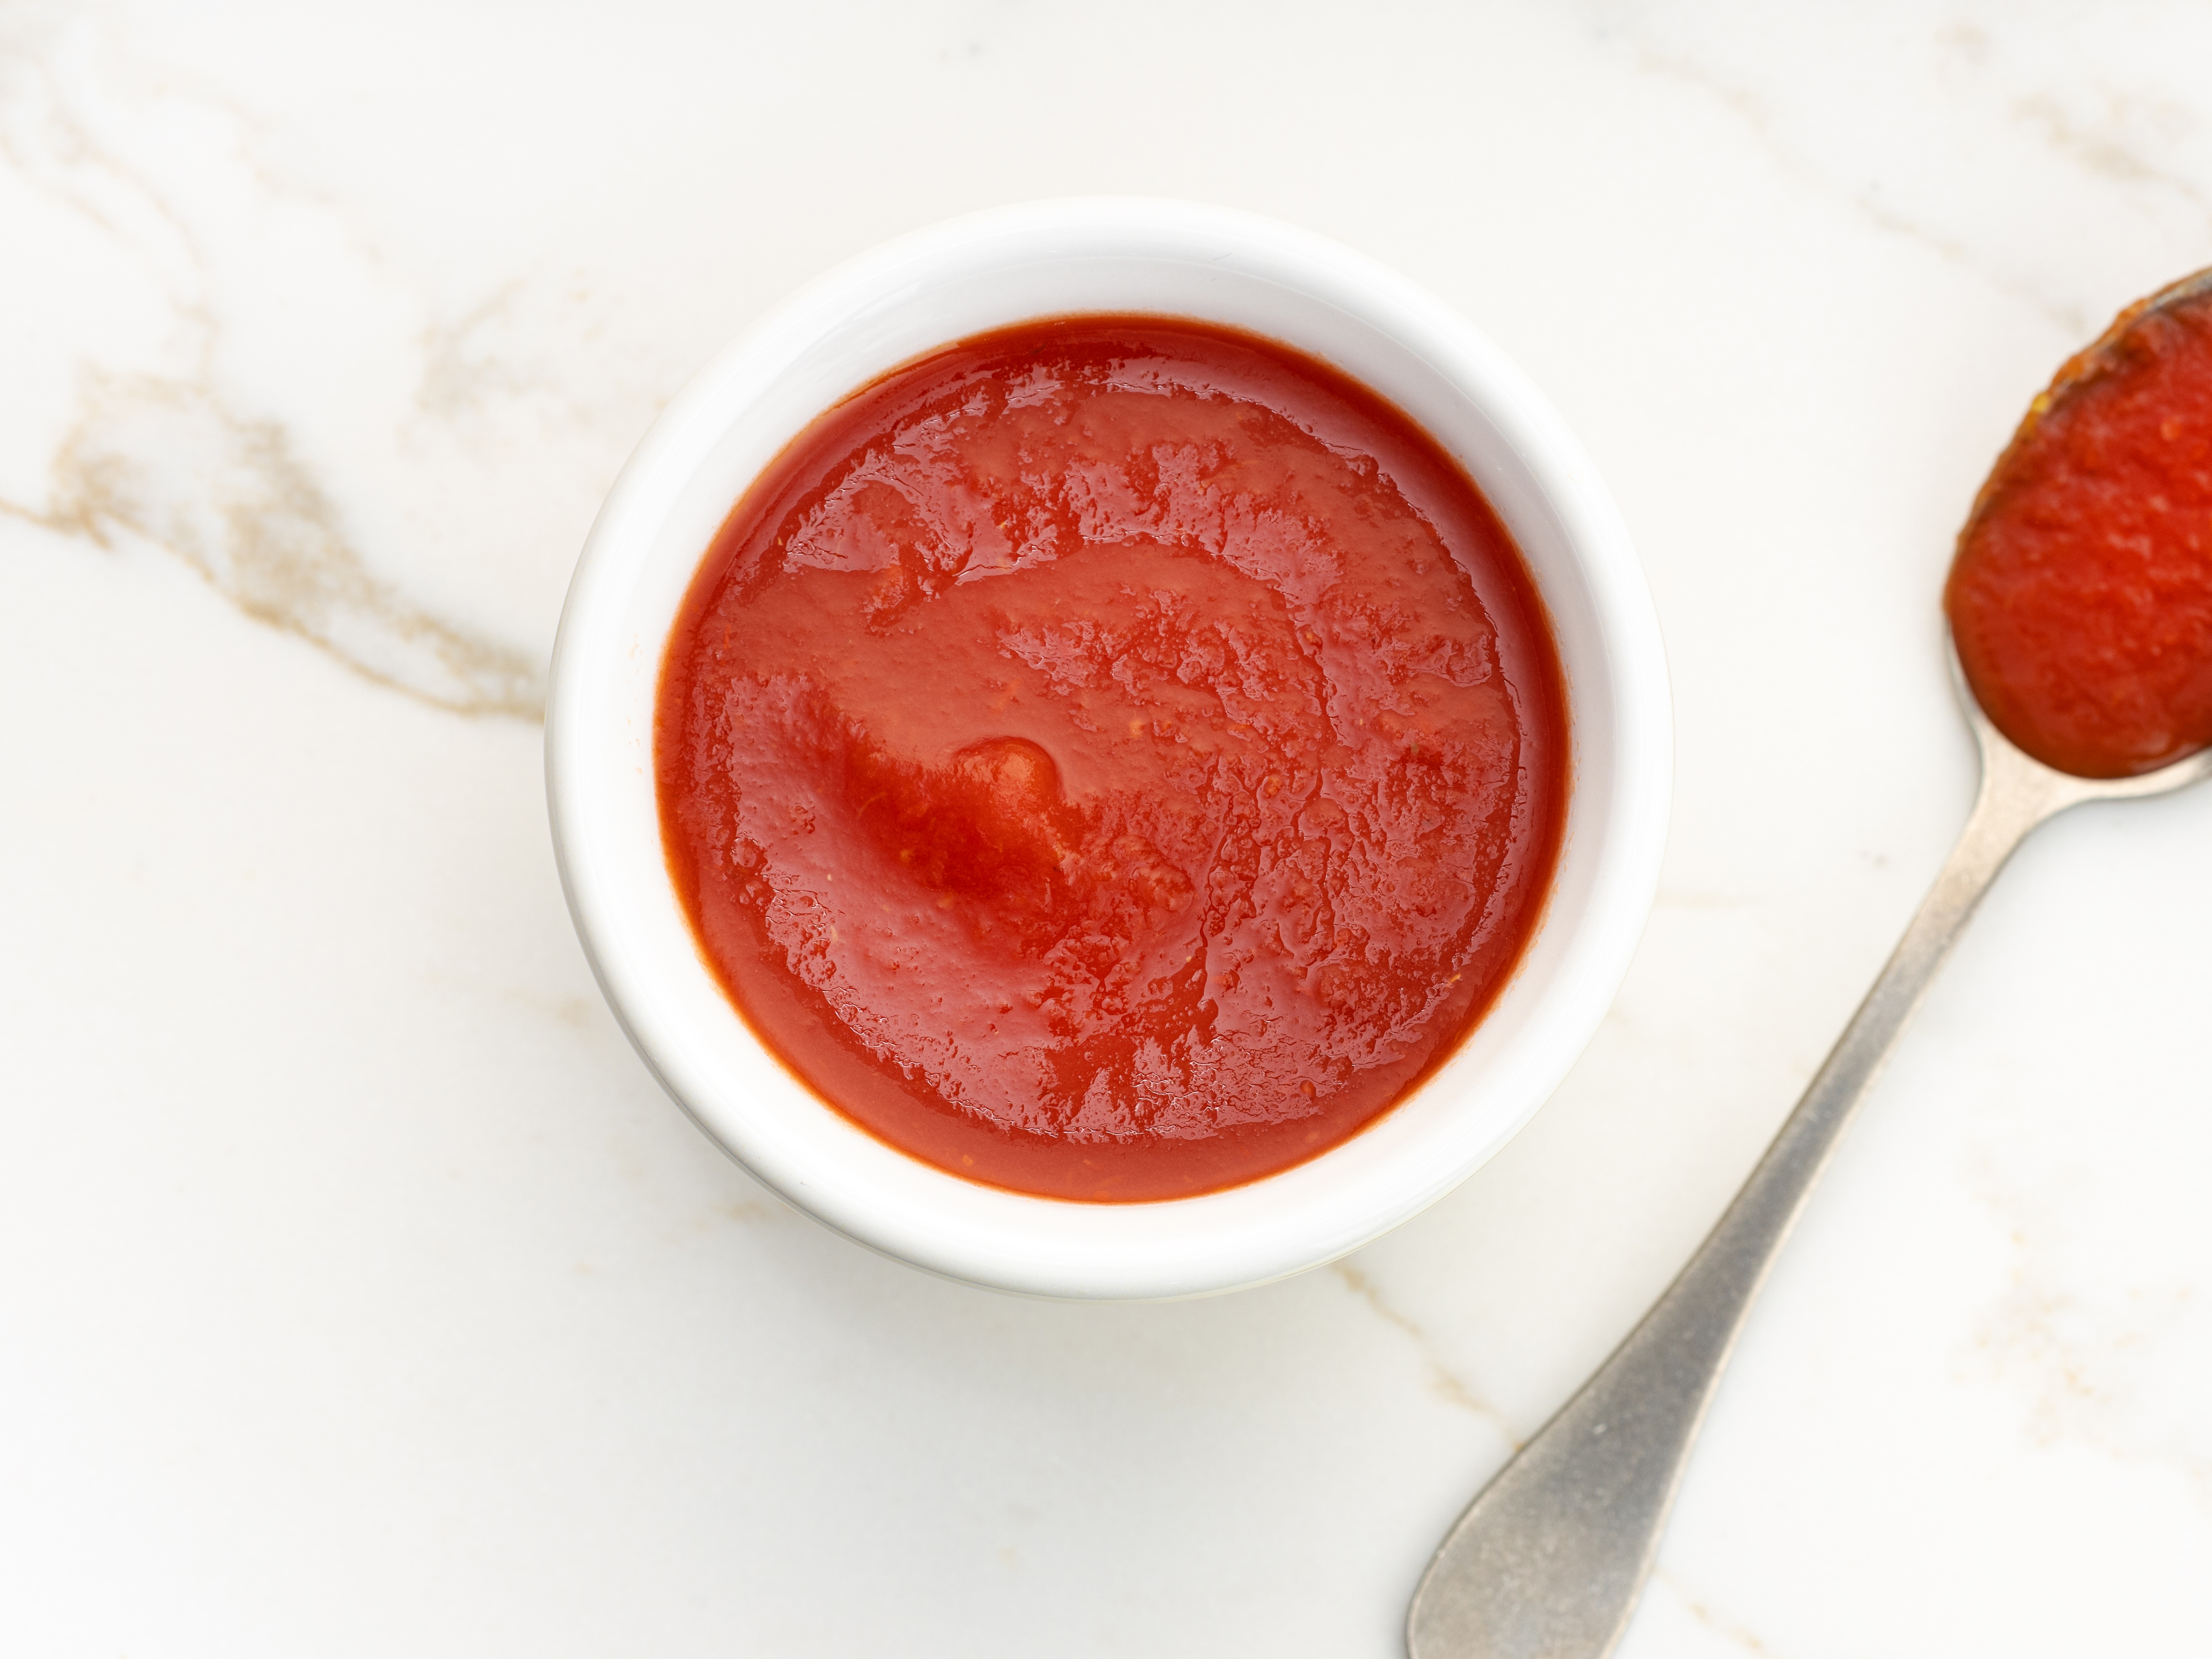 tomato paste substitute from tomato sauce